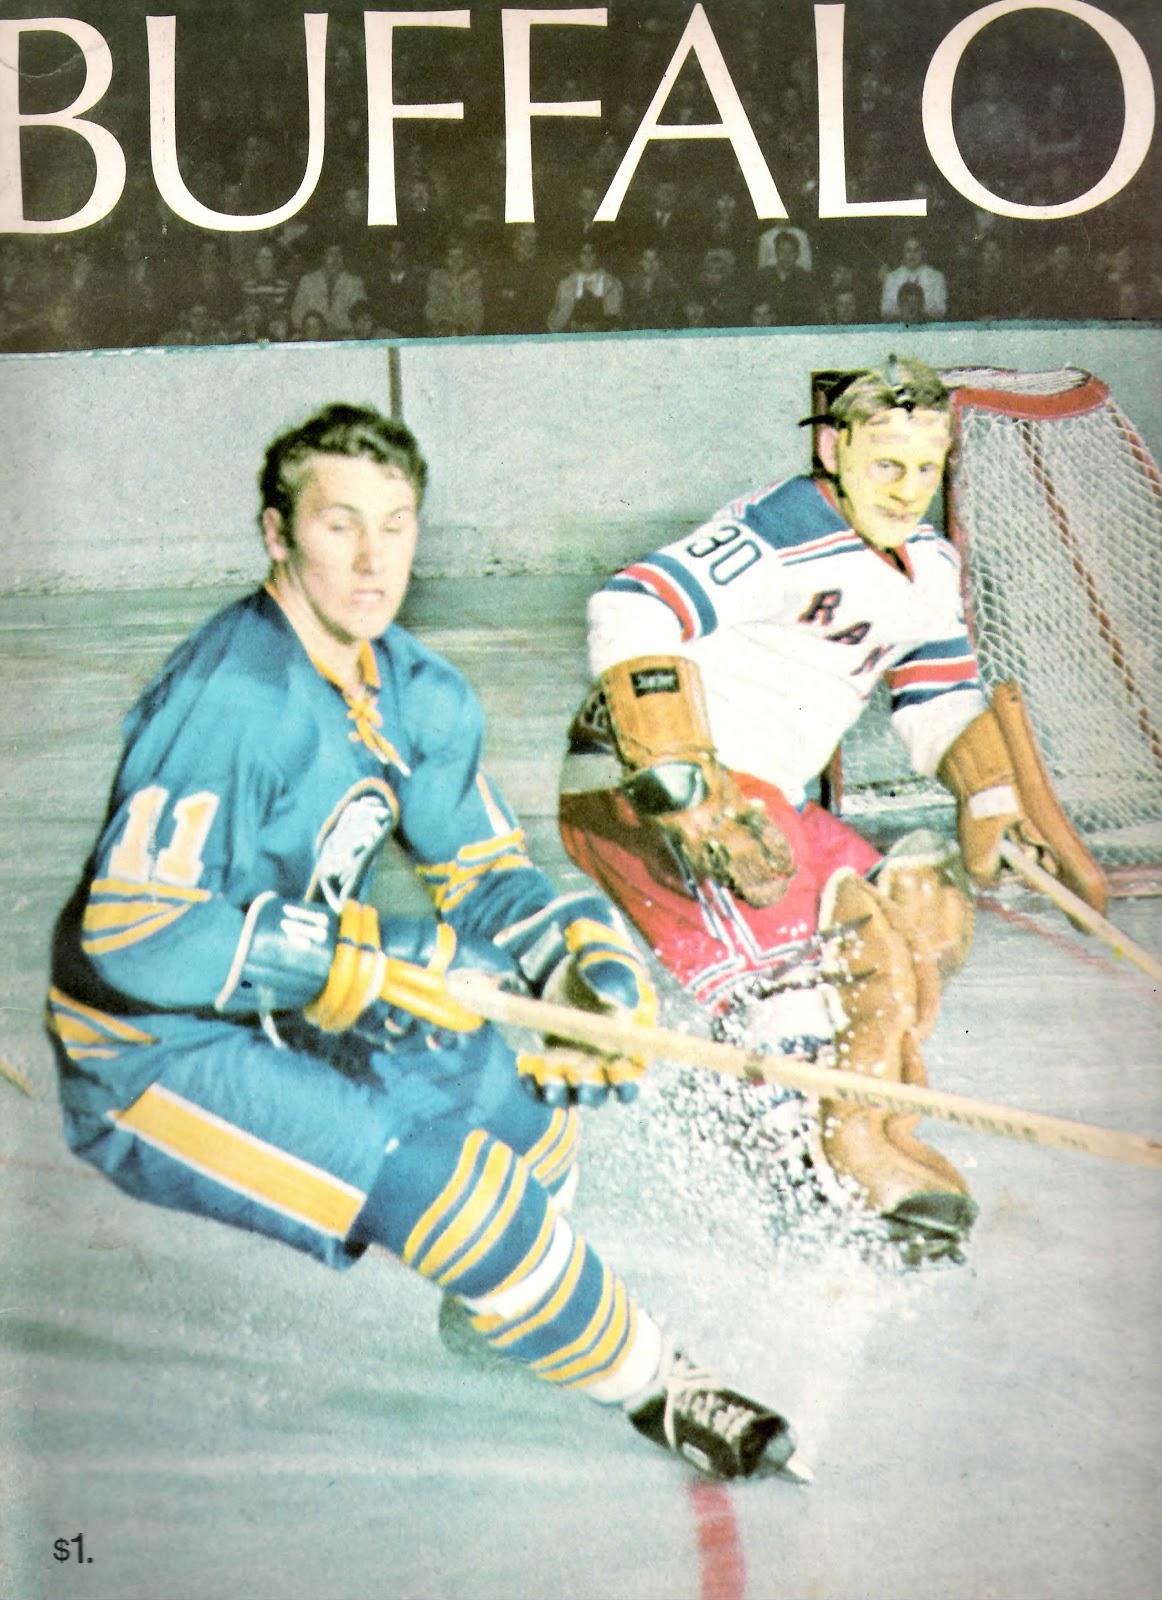 Toronto Maple Leafs 1970-71